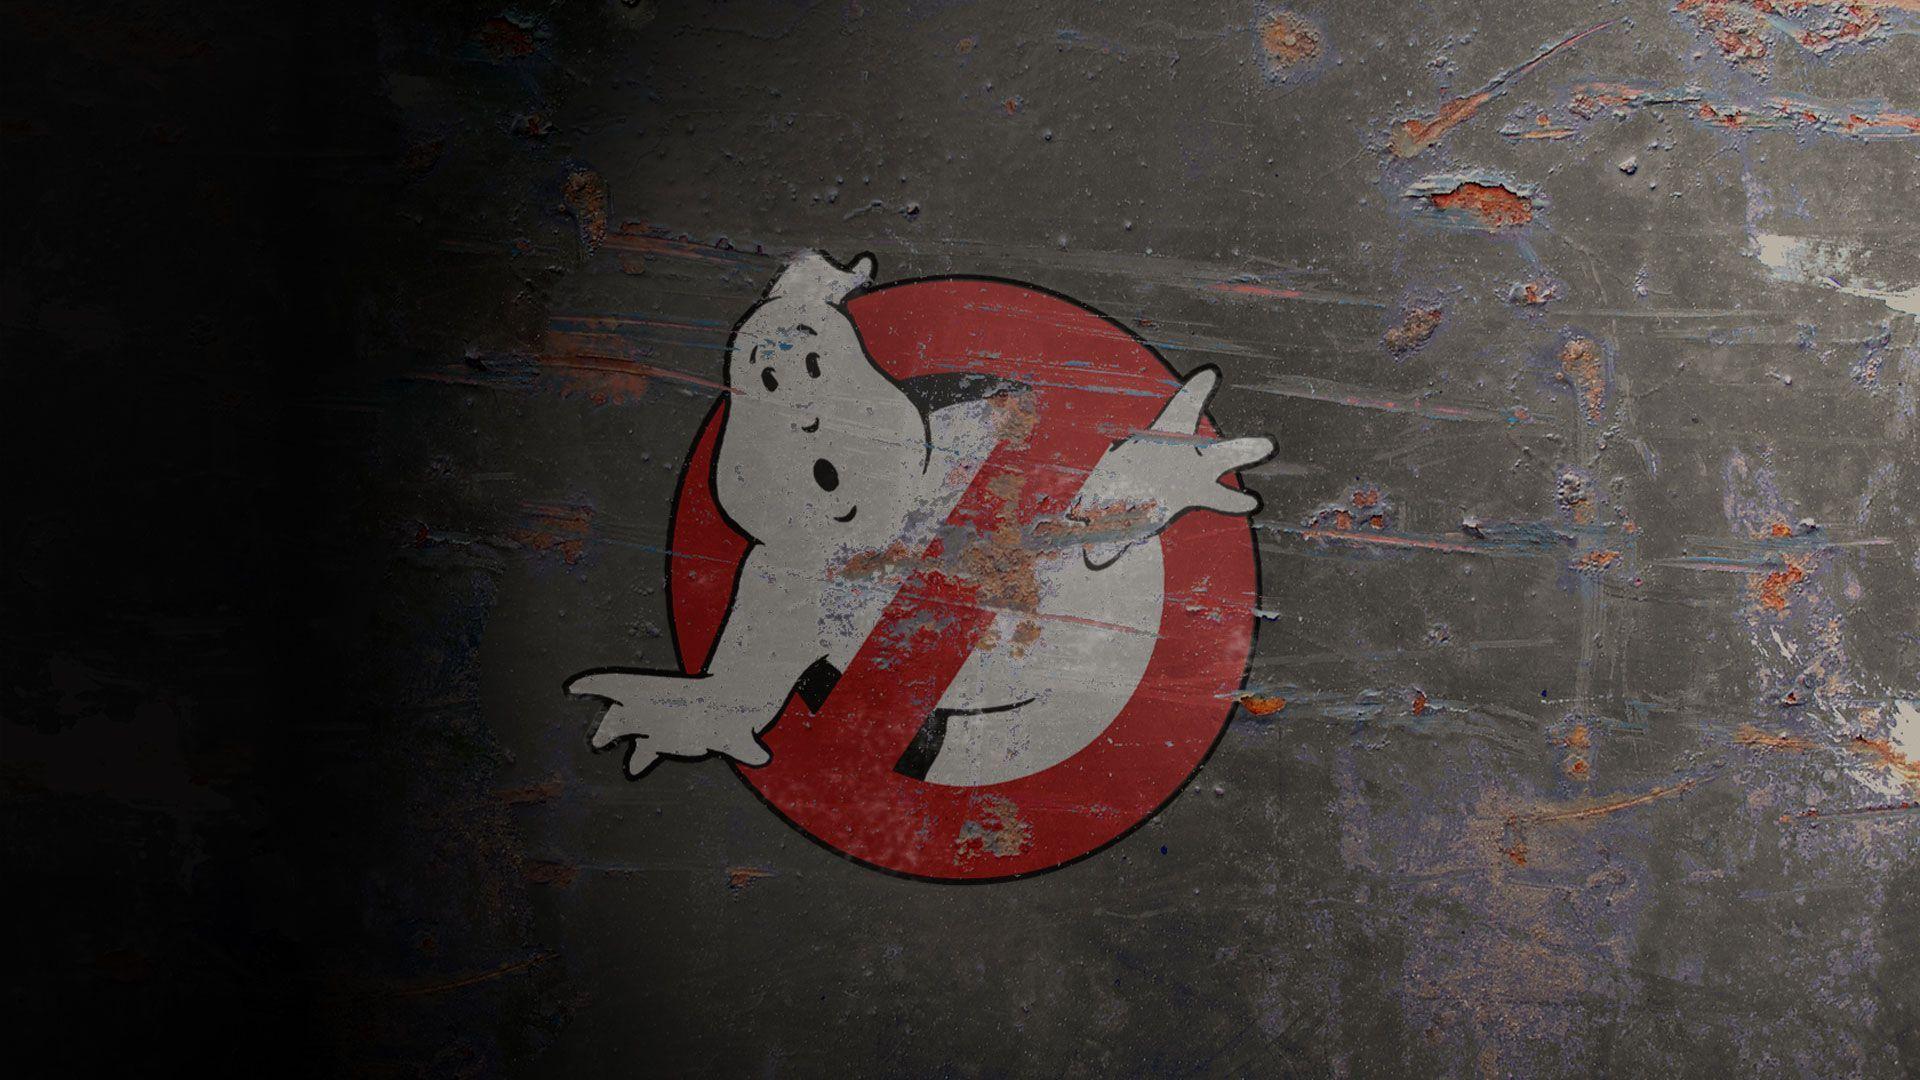 Ghostbusters Artwork Wallpapers